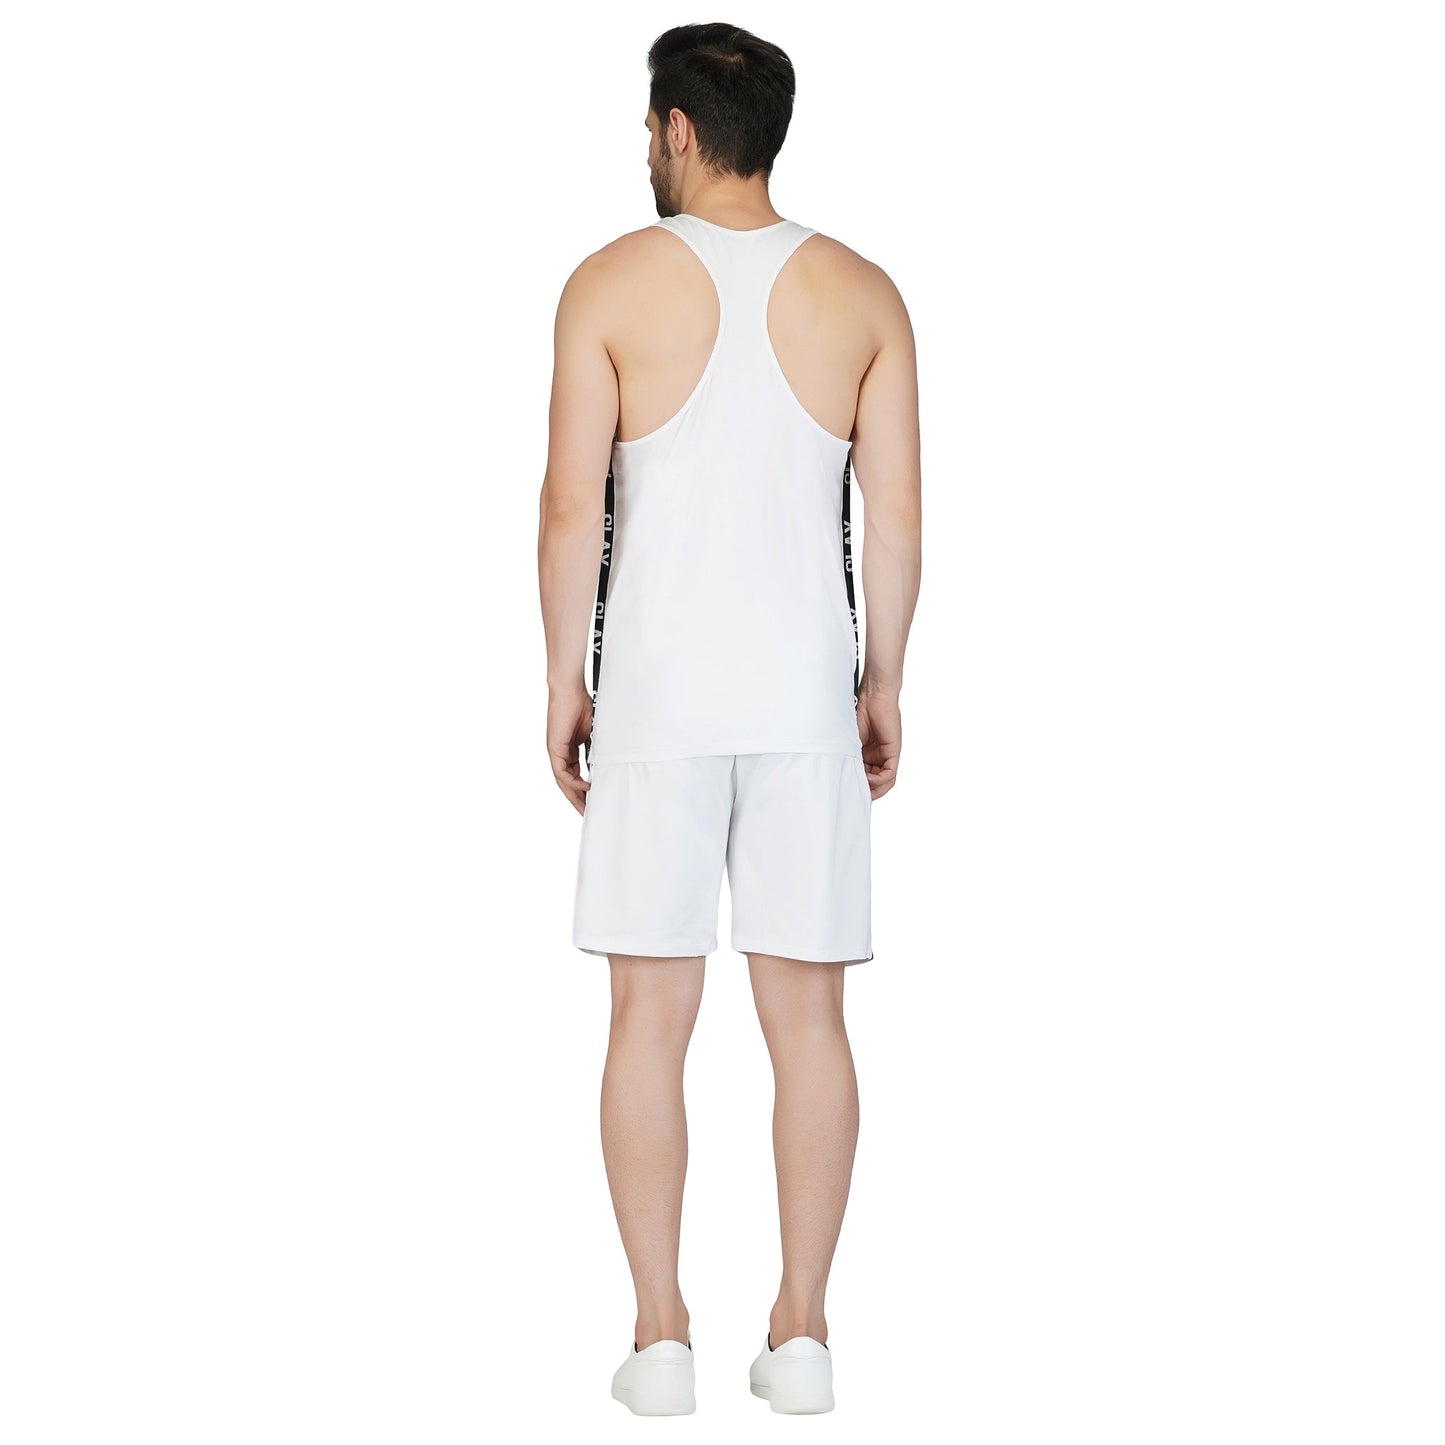 SLAY. Men's White Shorts(4 way Stretch Fabric)